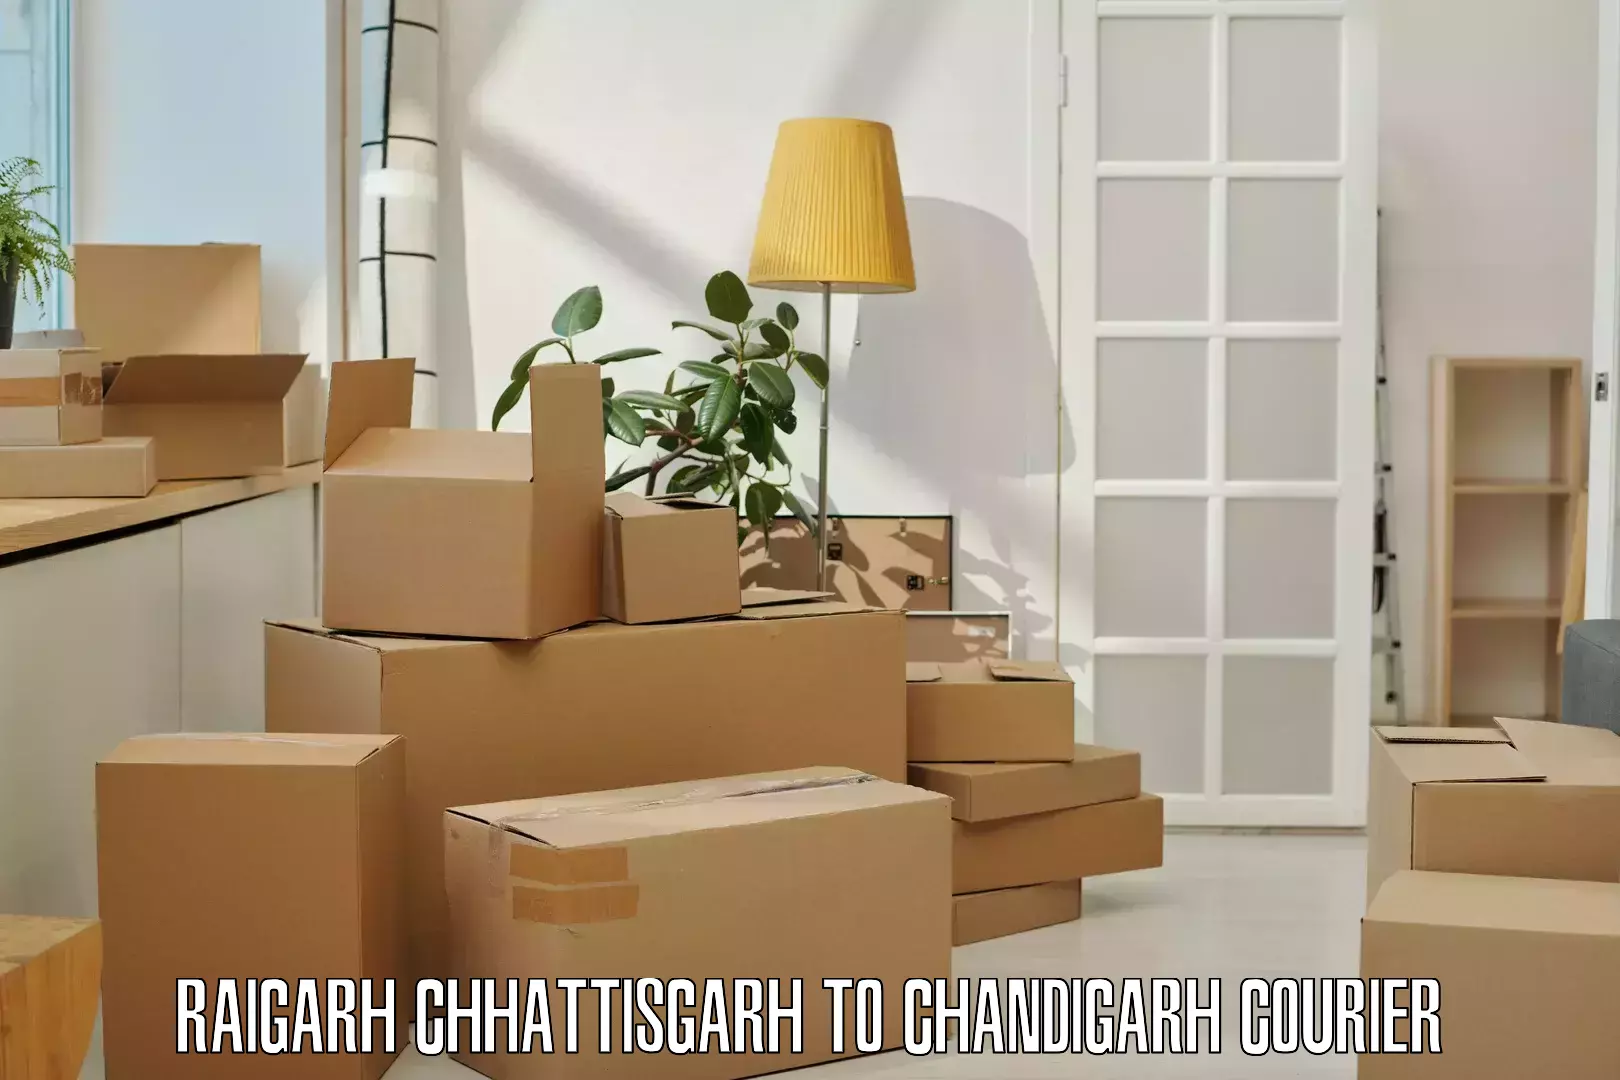 Express mail service Raigarh Chhattisgarh to Chandigarh